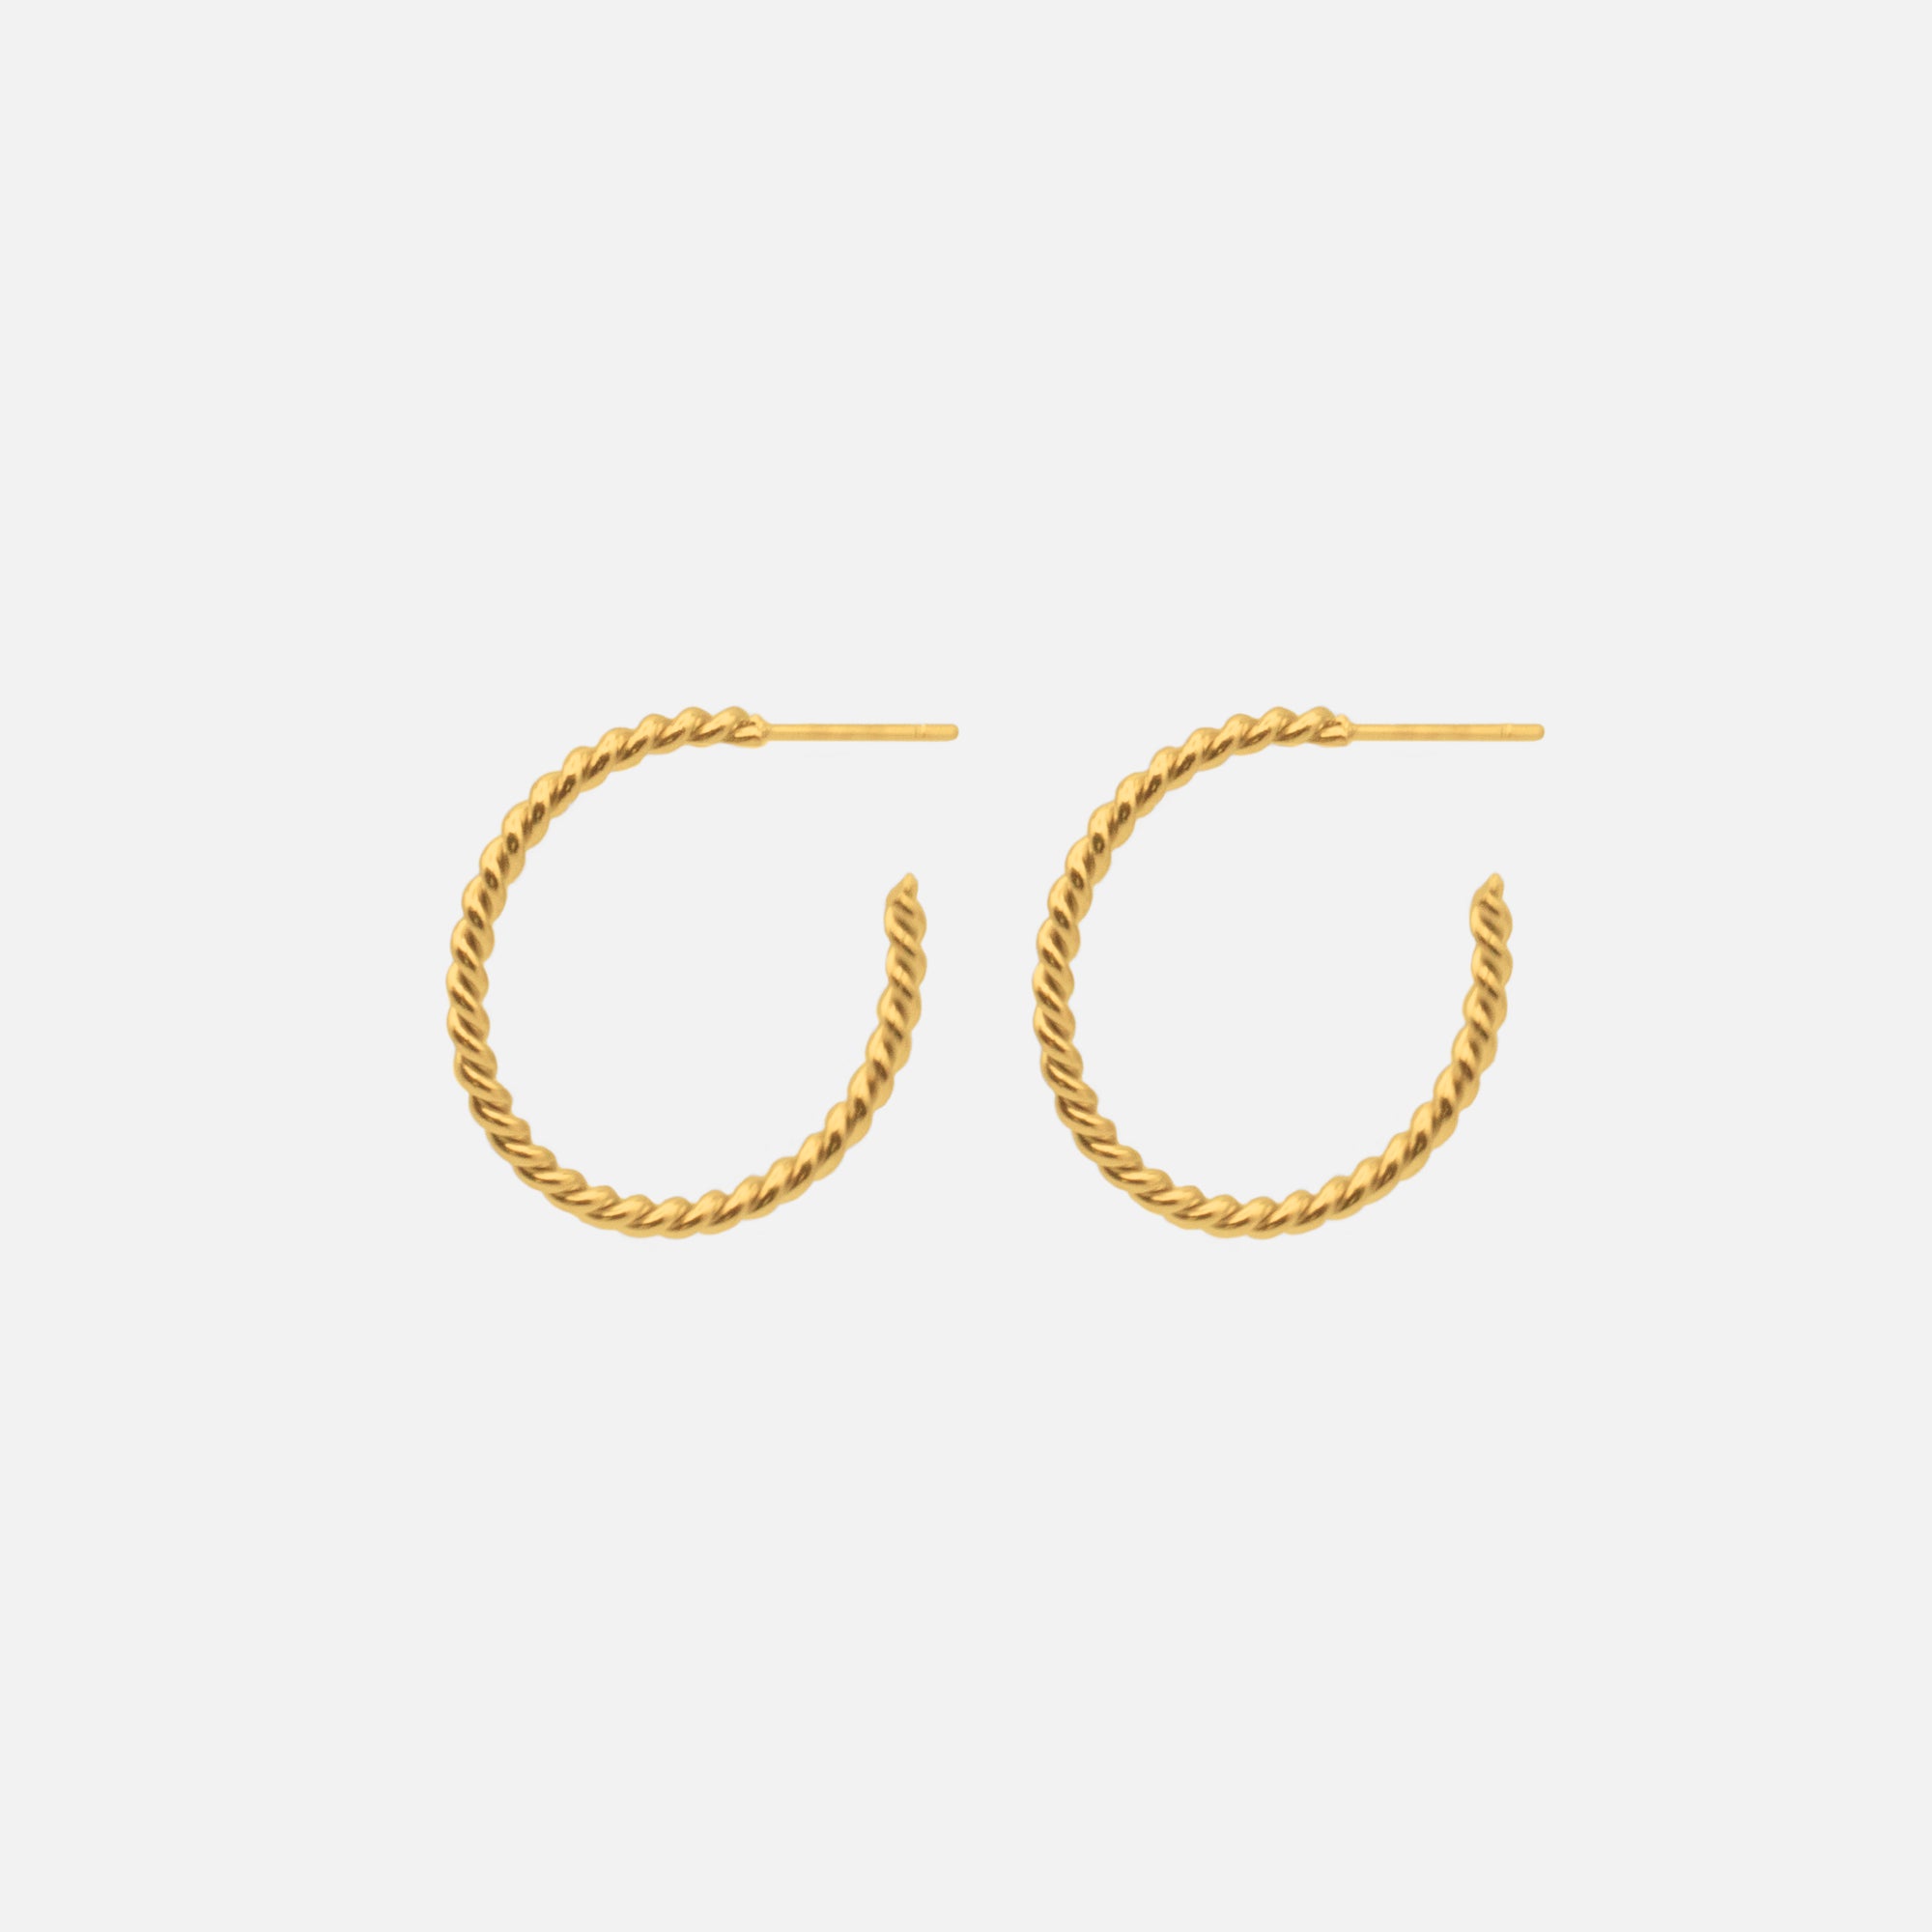 Fine gold hoop earrings 25 mm twisted in stainless steel